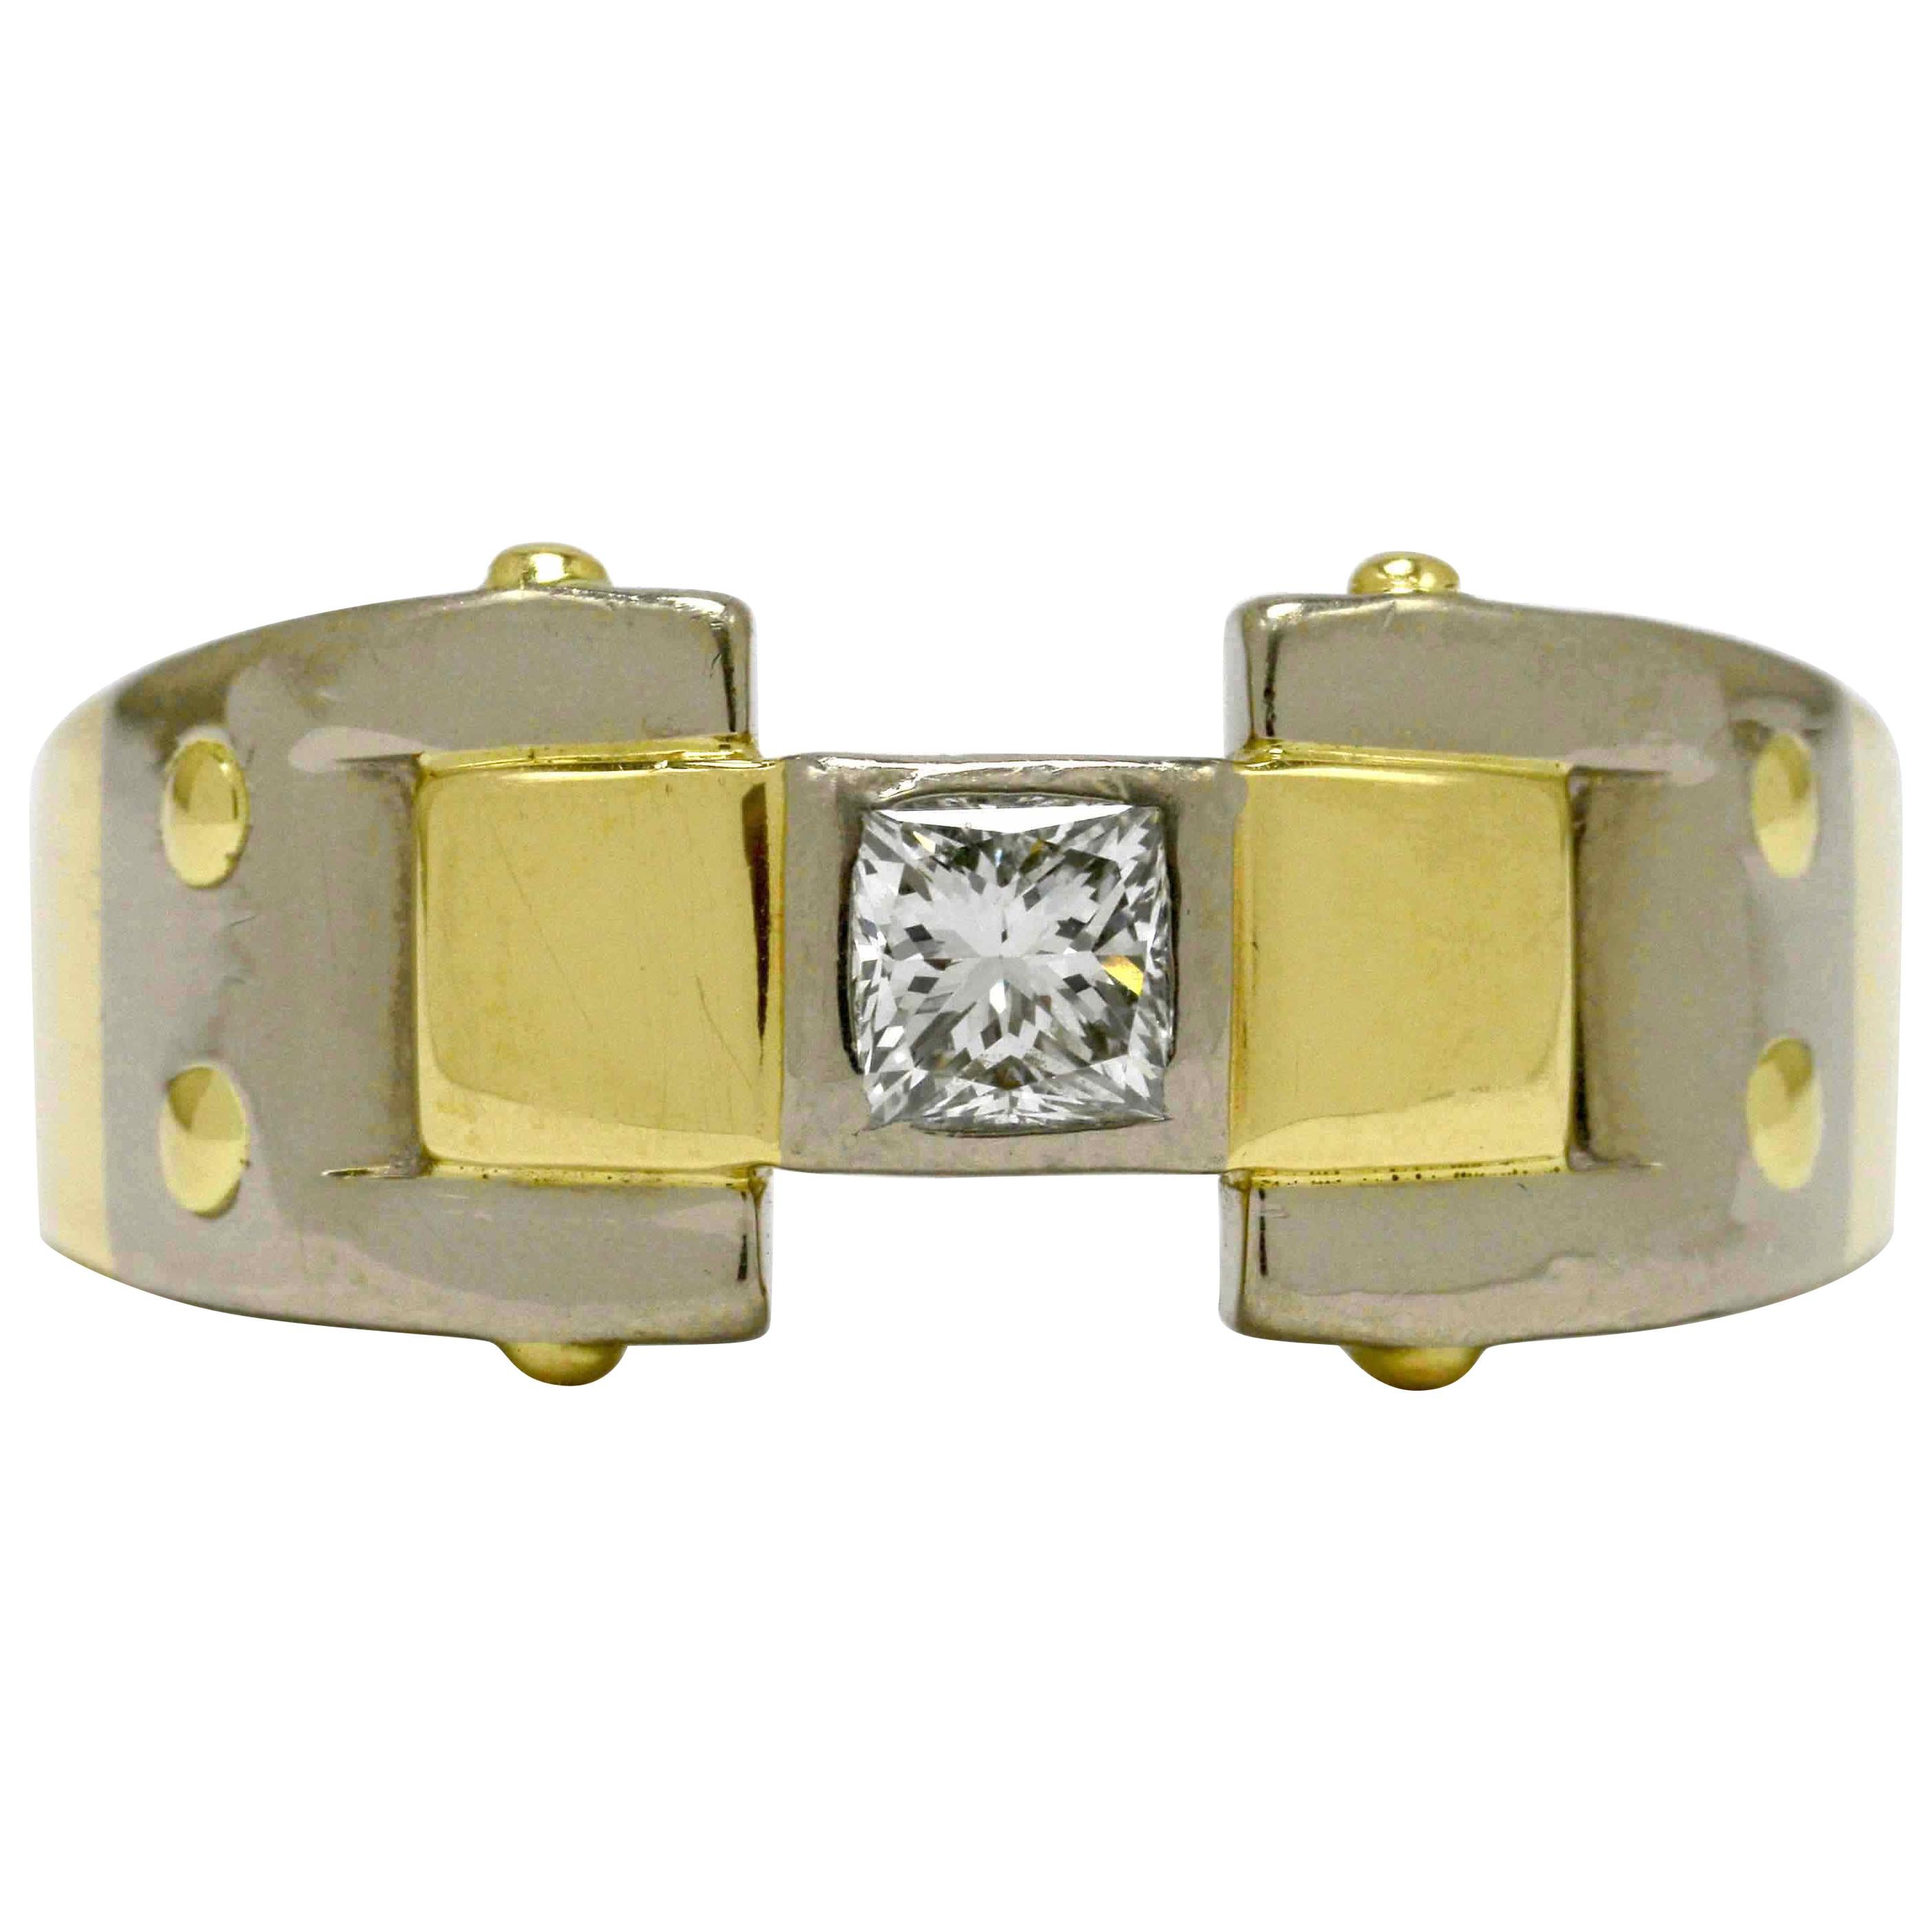 Men’s Diamond Ring Cartier Inspired Art Deco Wedding Band Solitaire